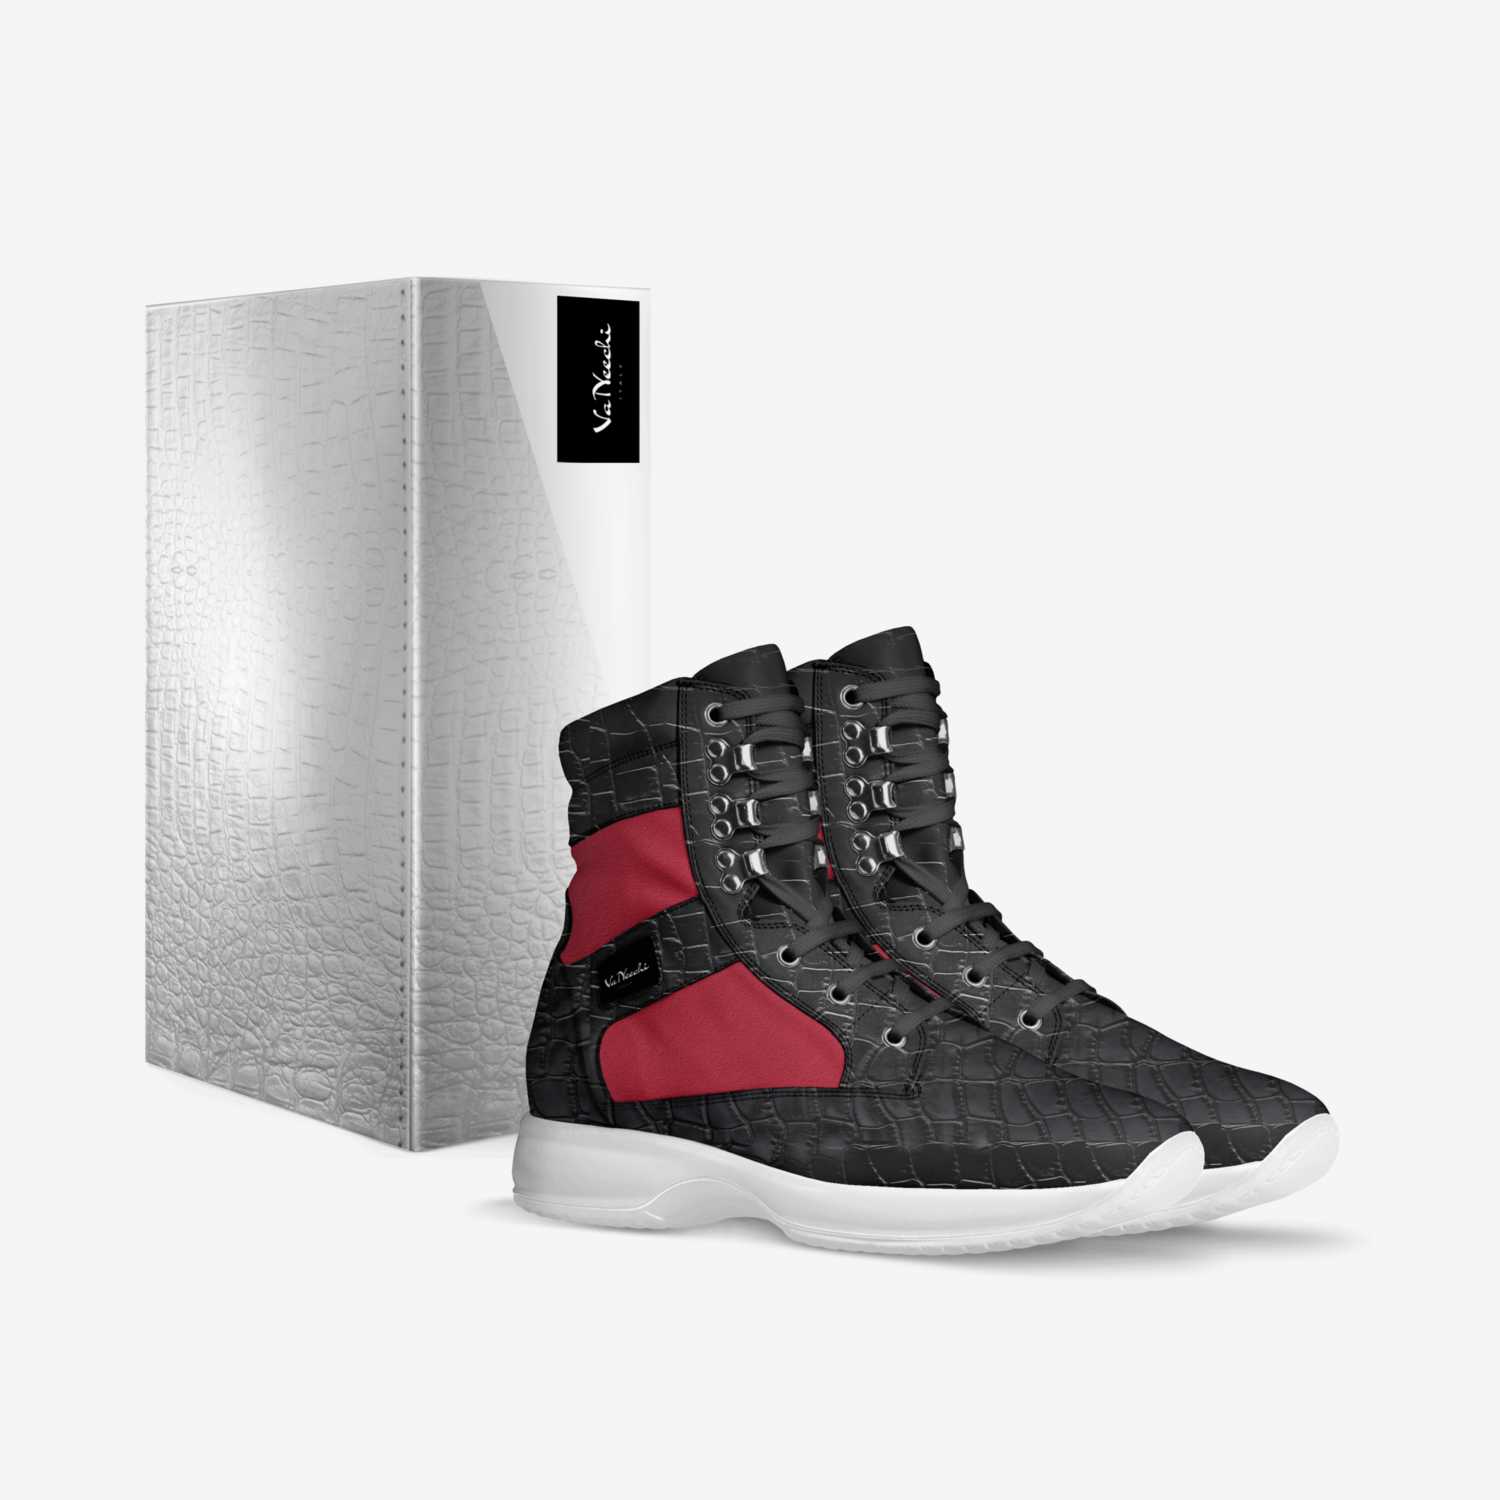 VaNeechi custom made in Italy shoes by Lenard English | Box view